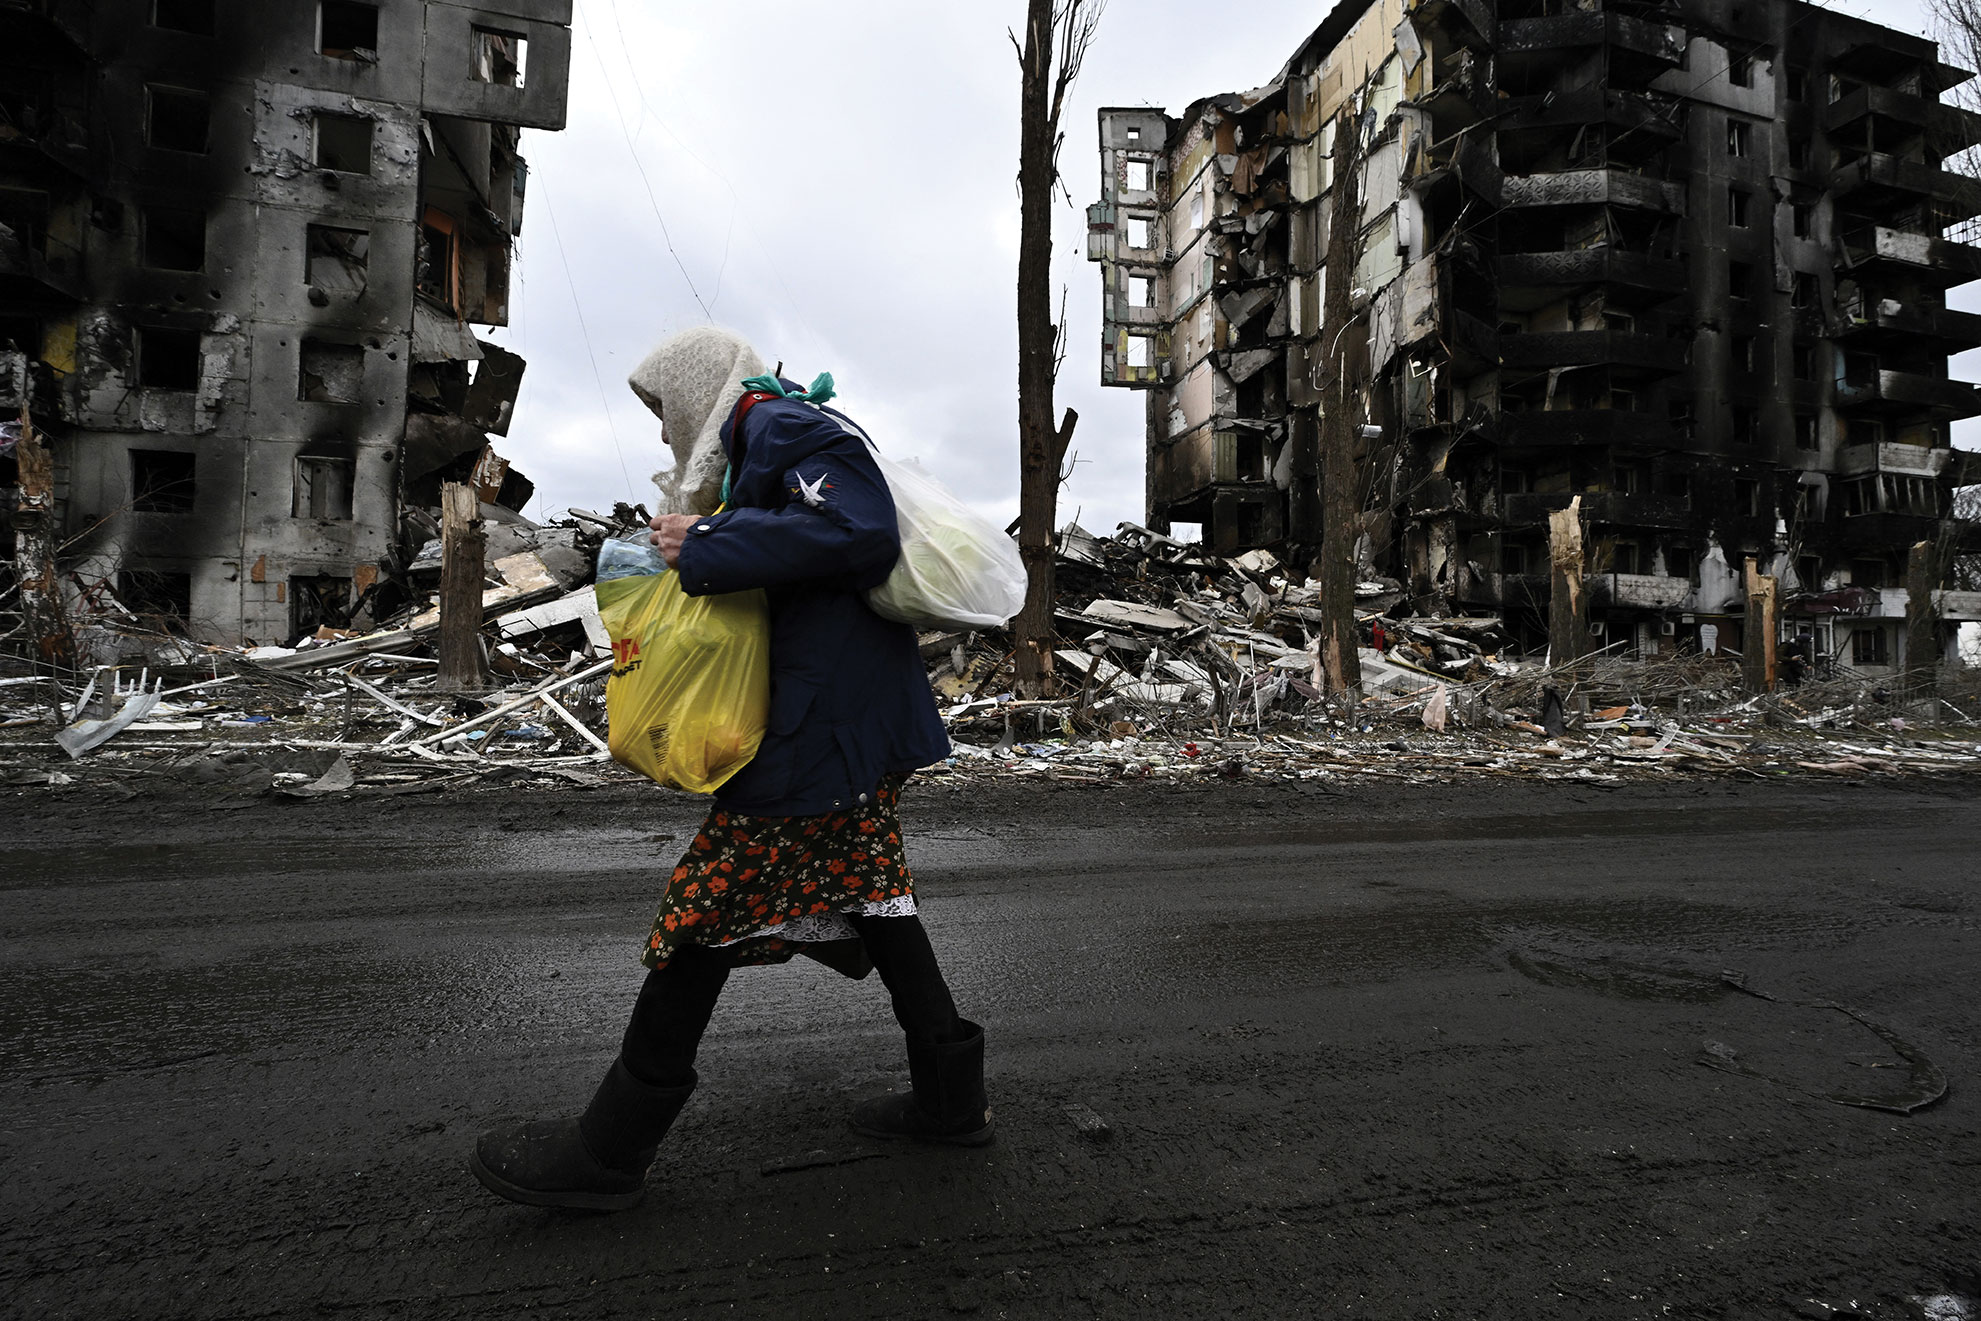 Genya SAVILOV / AFP